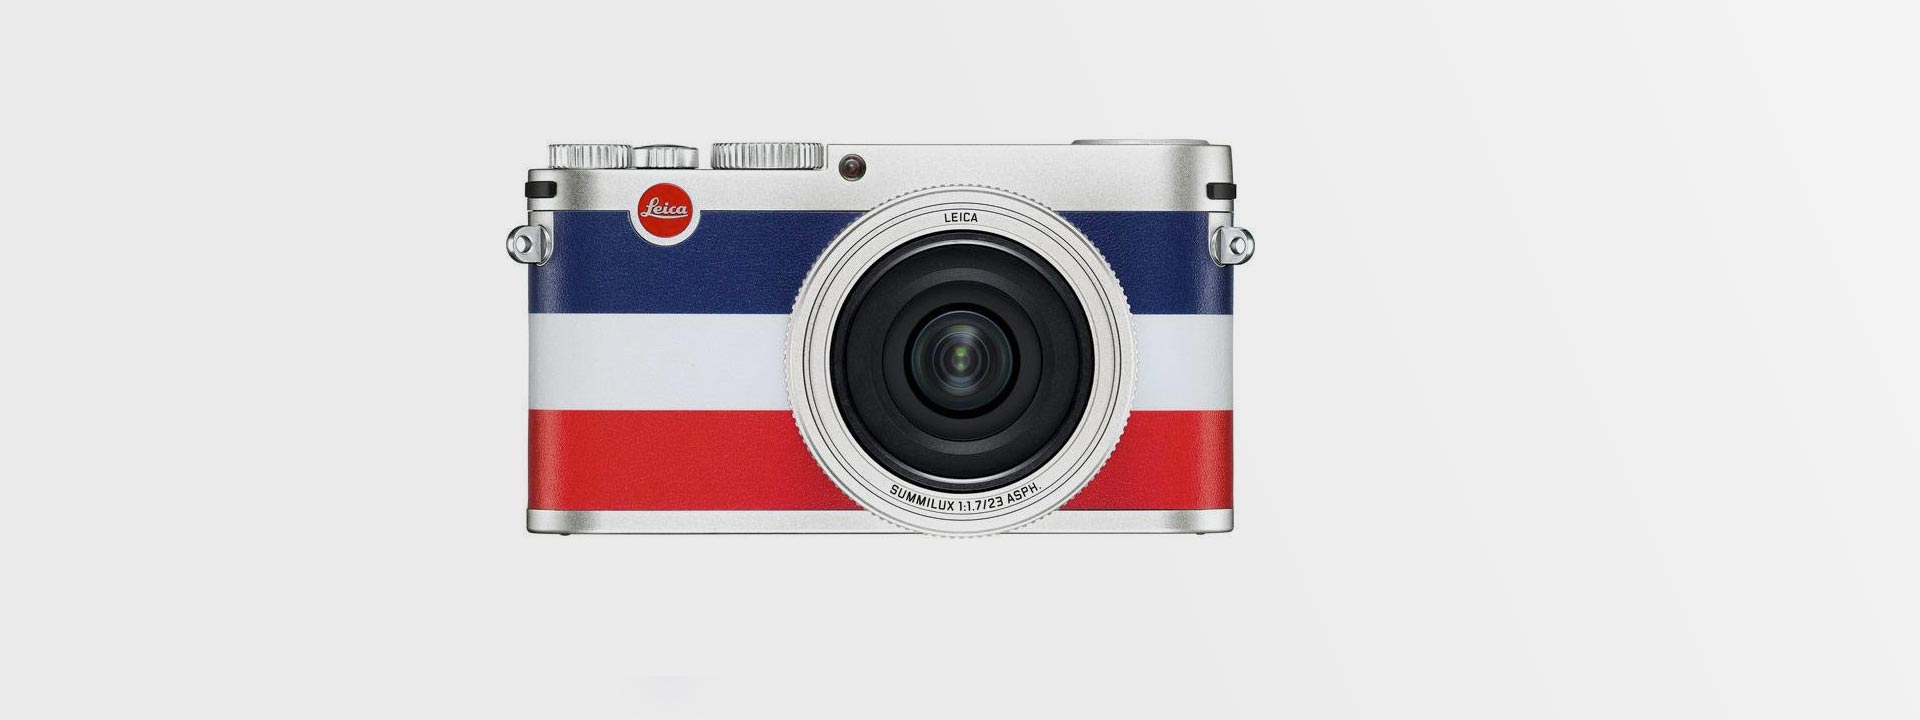 Фотокамера Leica X Typ 113 Moncler Edition